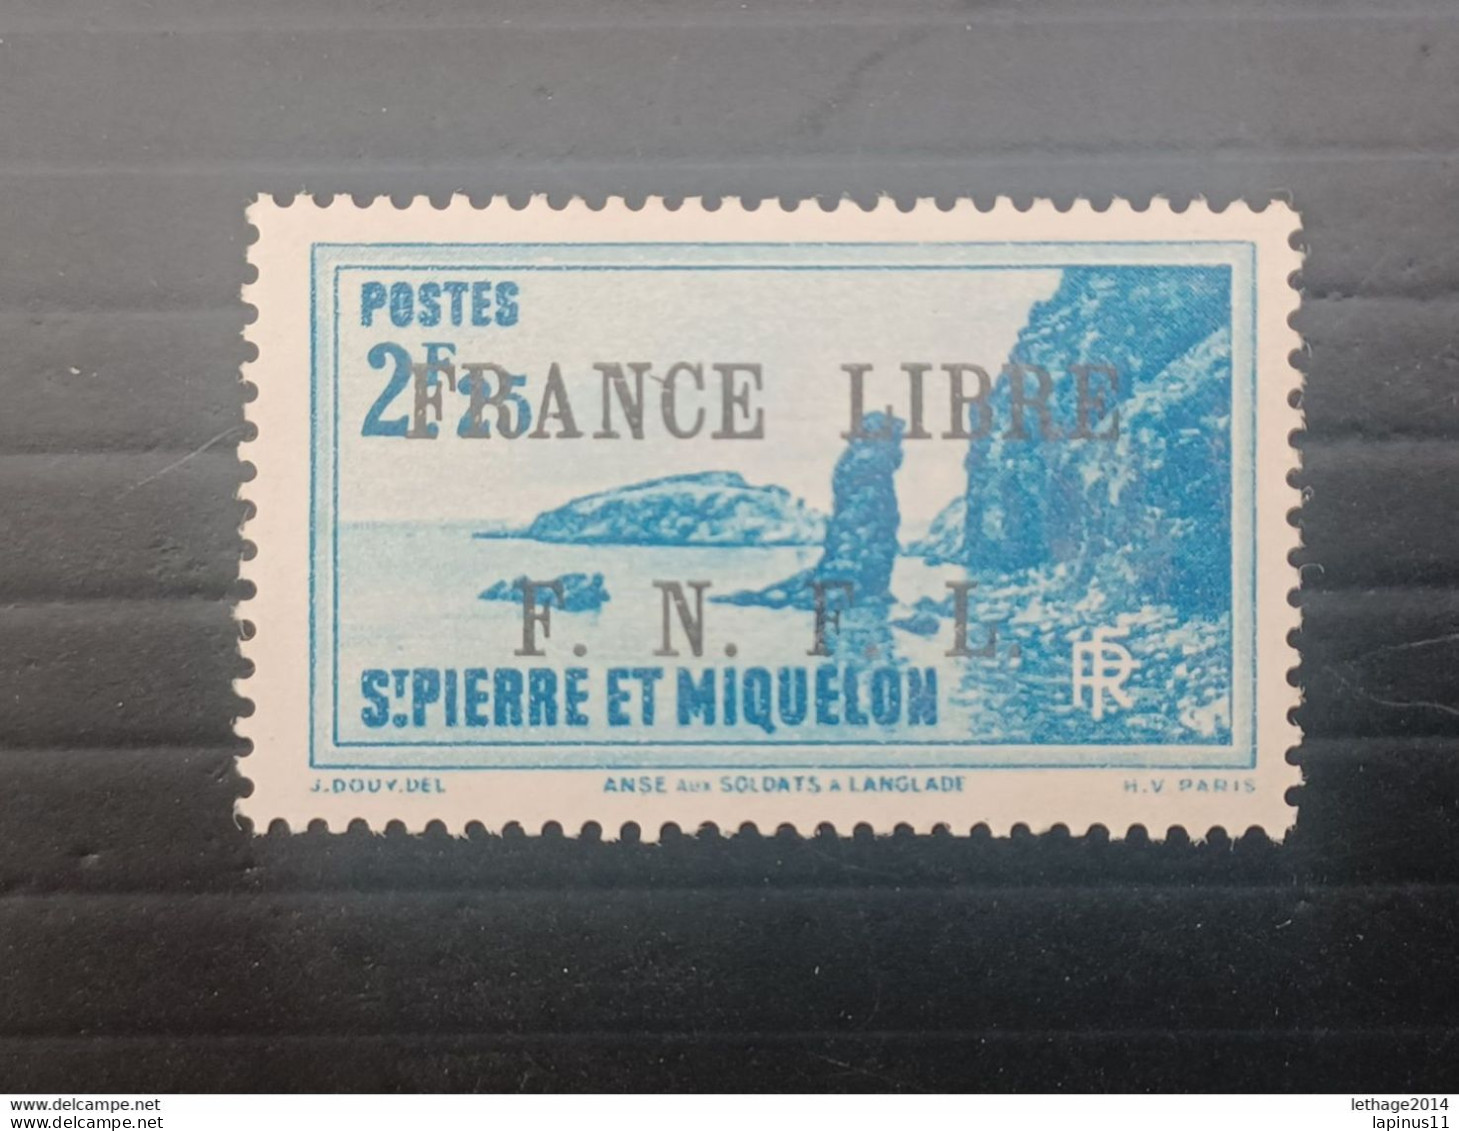 ST PIERRE ET MIQUELLON 1941 STAMPS OF 1922 OVERPRINT FRANCE LIBRE F N F L CAT. YVERT N. 269 MNG - Ongebruikt